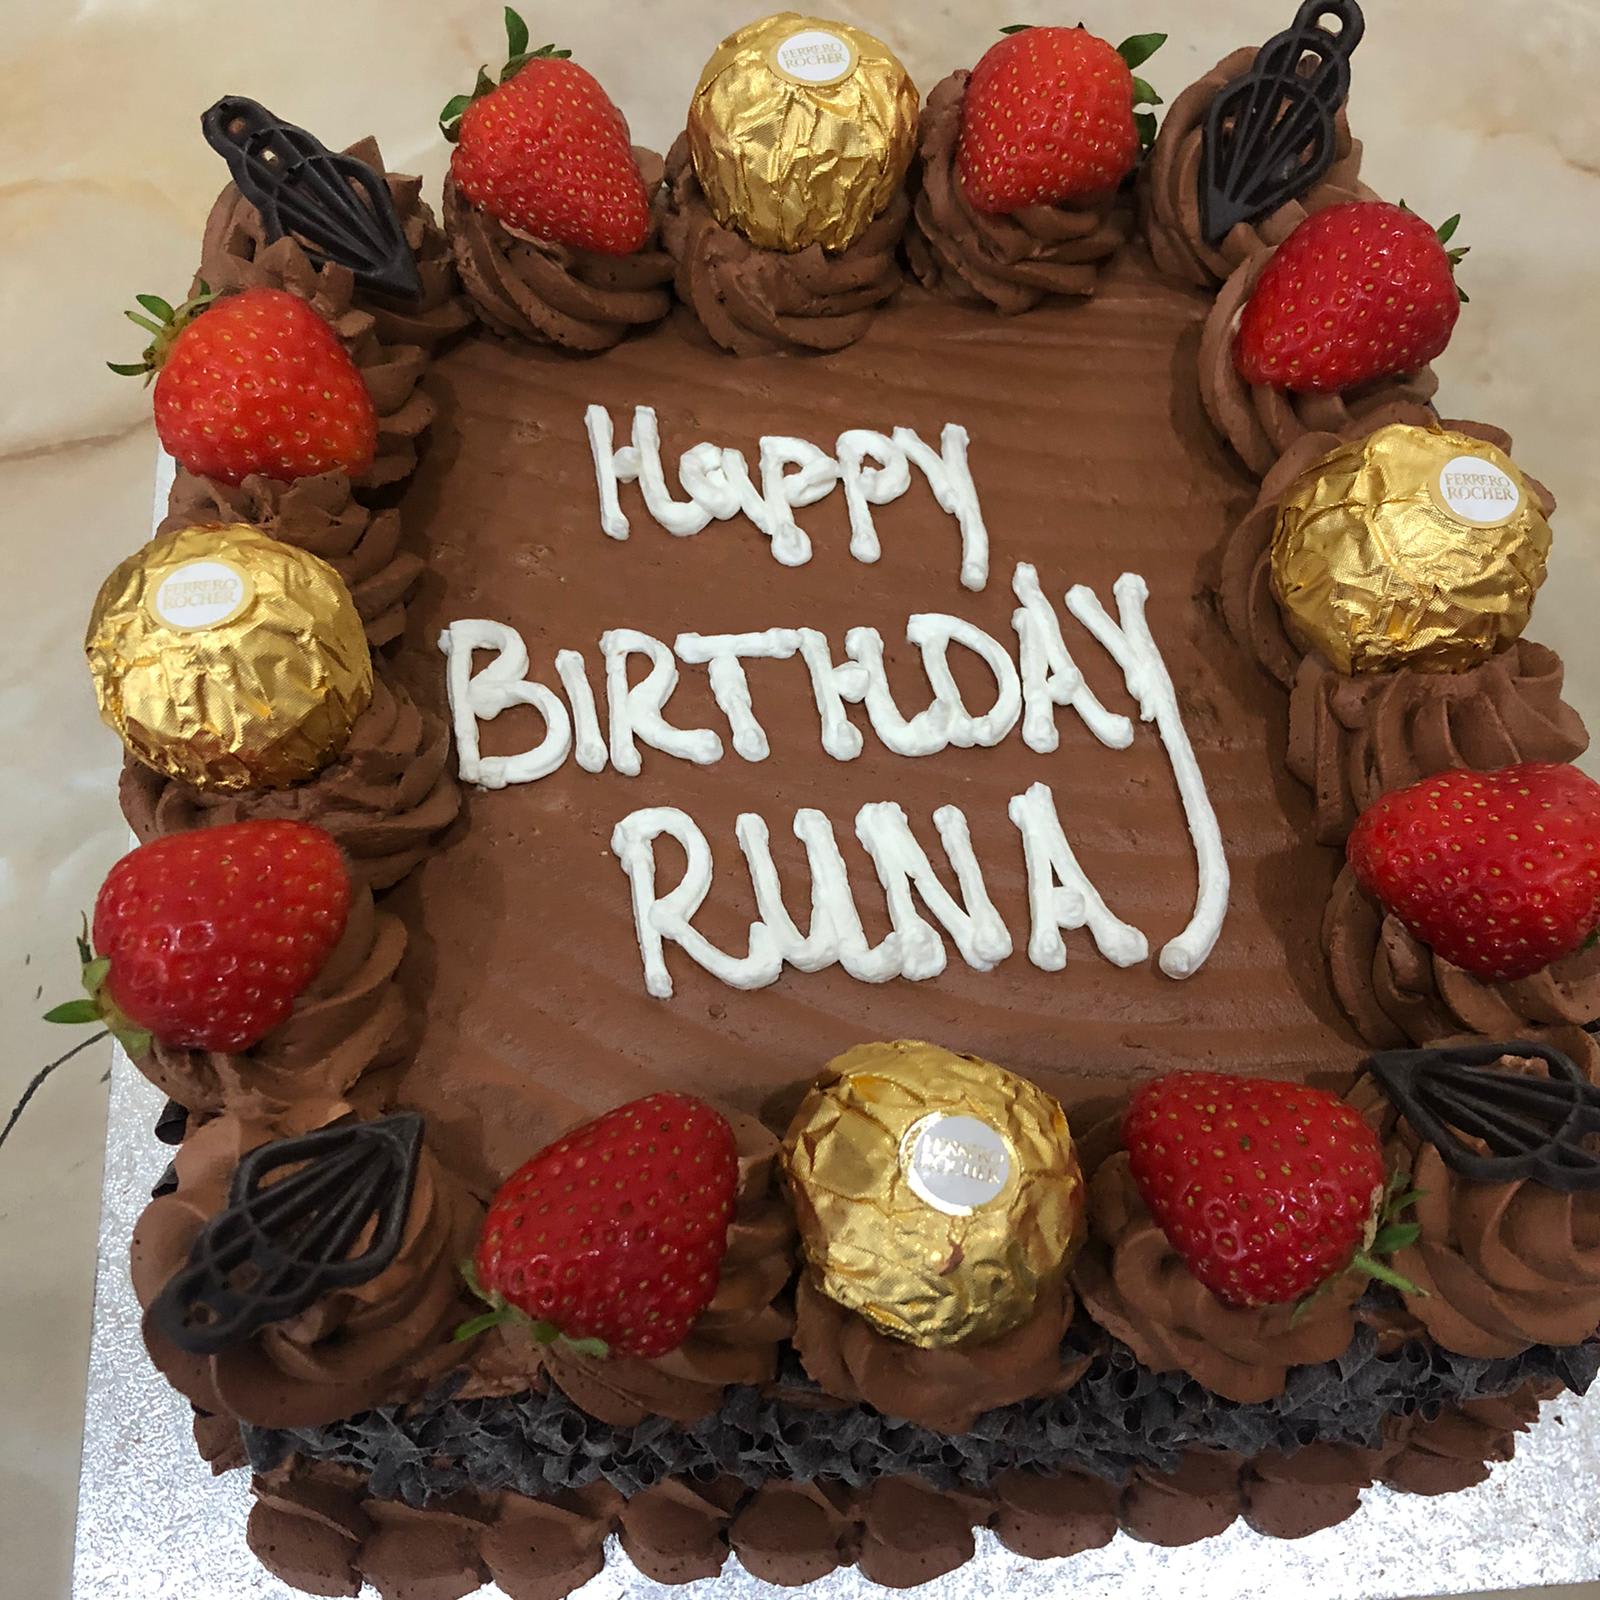 Happy Birthday Rina GIFs - Download original images on Funimada.com